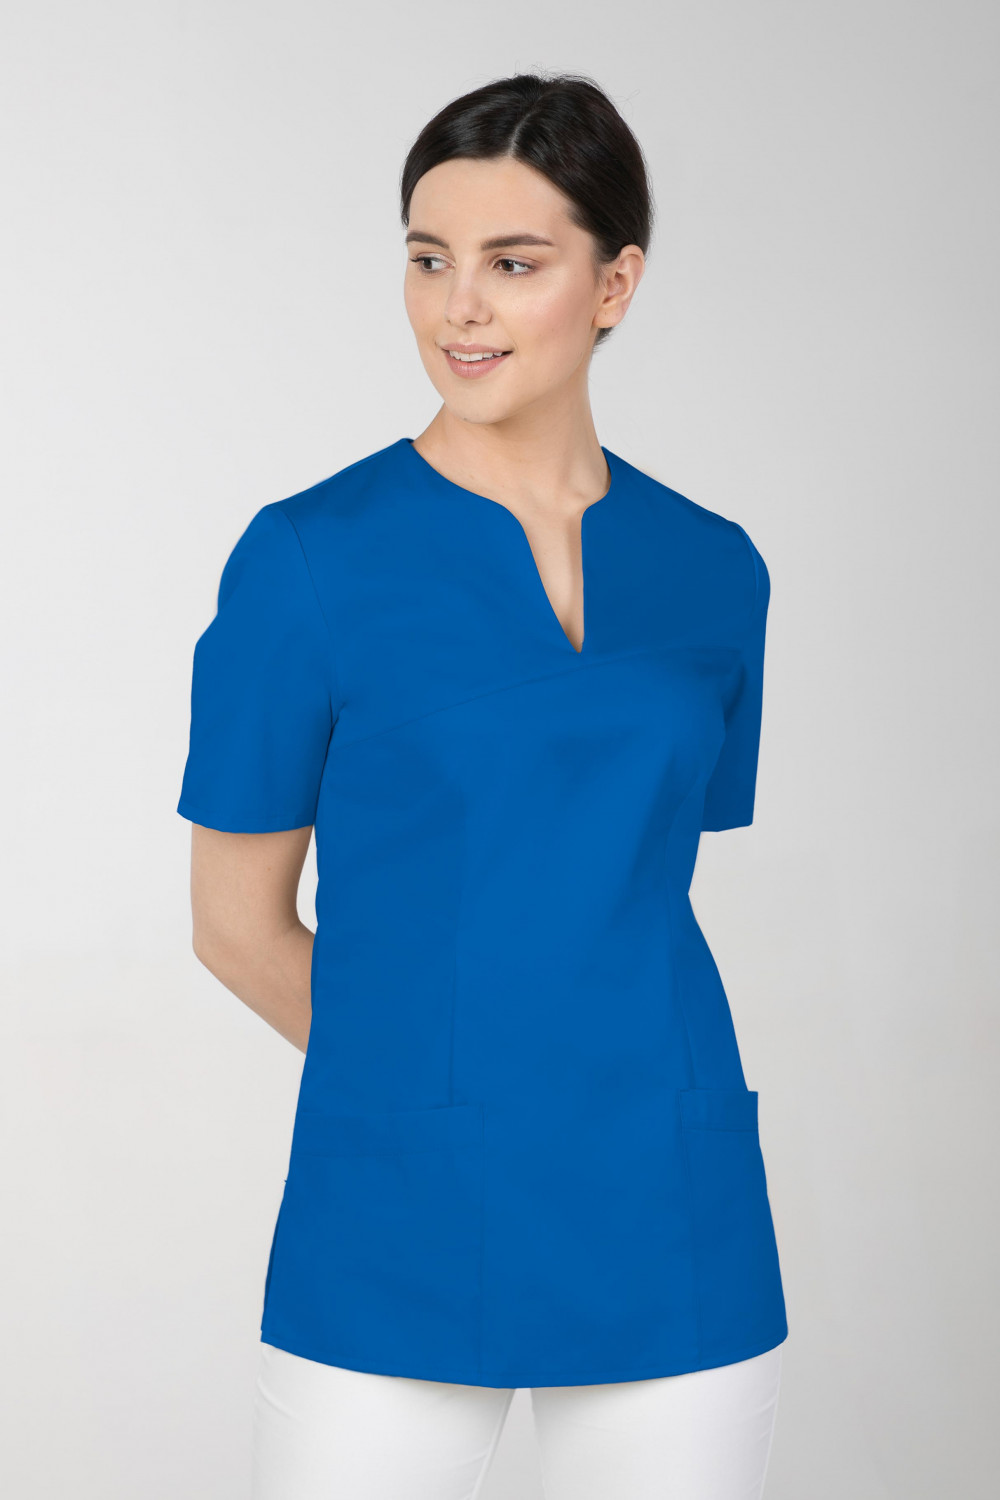 M-323X Bluza damska medyczna elastyczna kosmetyczna kolor indygo